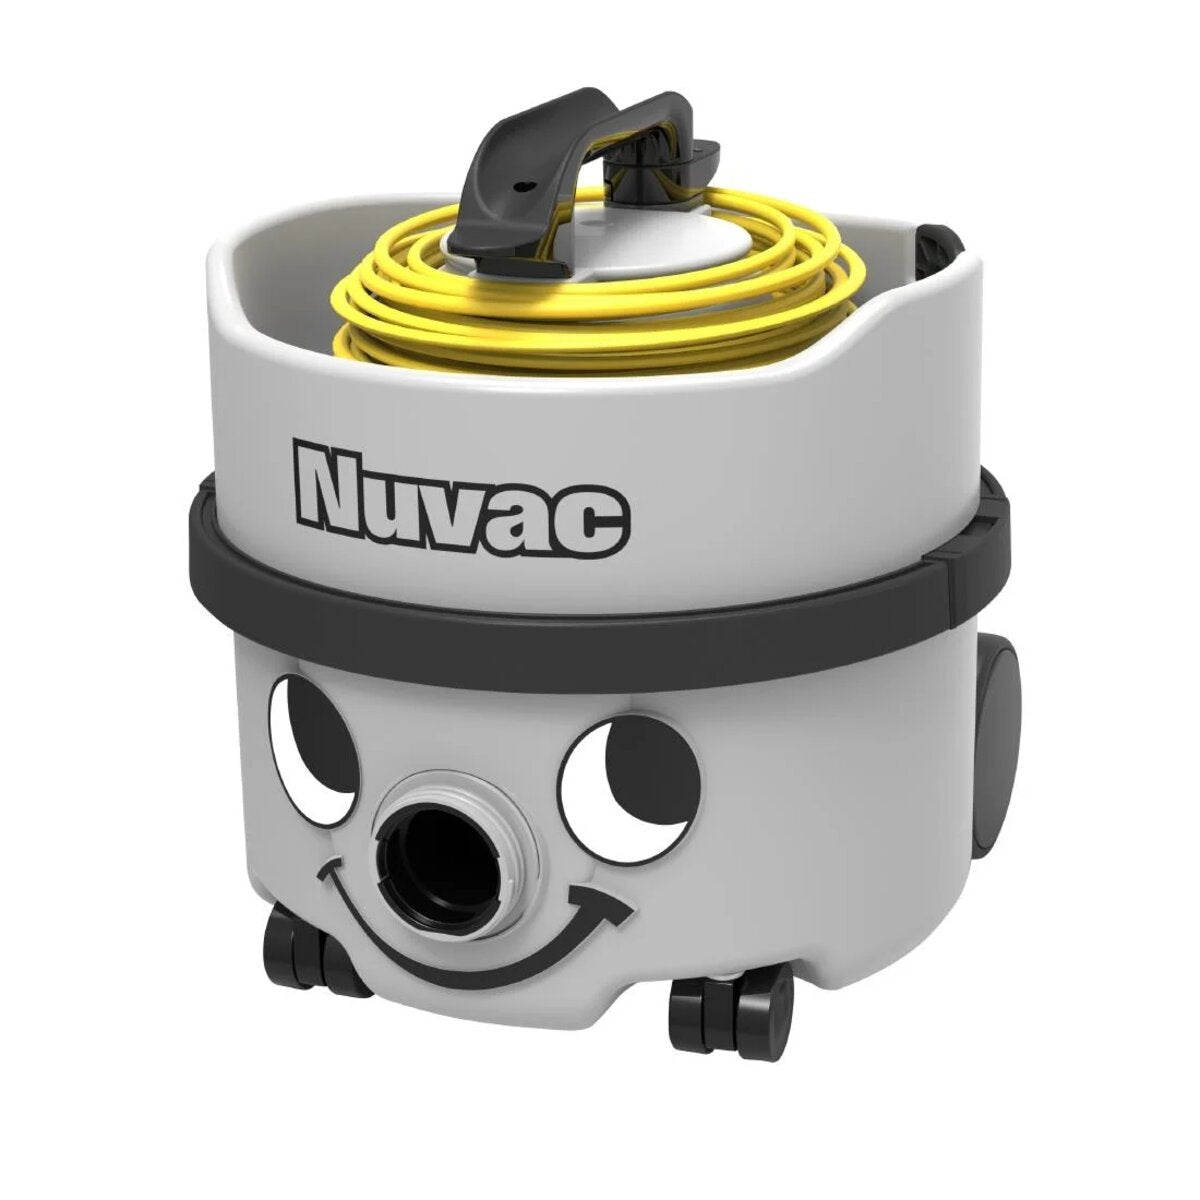 Numatic VNP180-11 230V Commercial Dry Vacuum Cleaner 8L